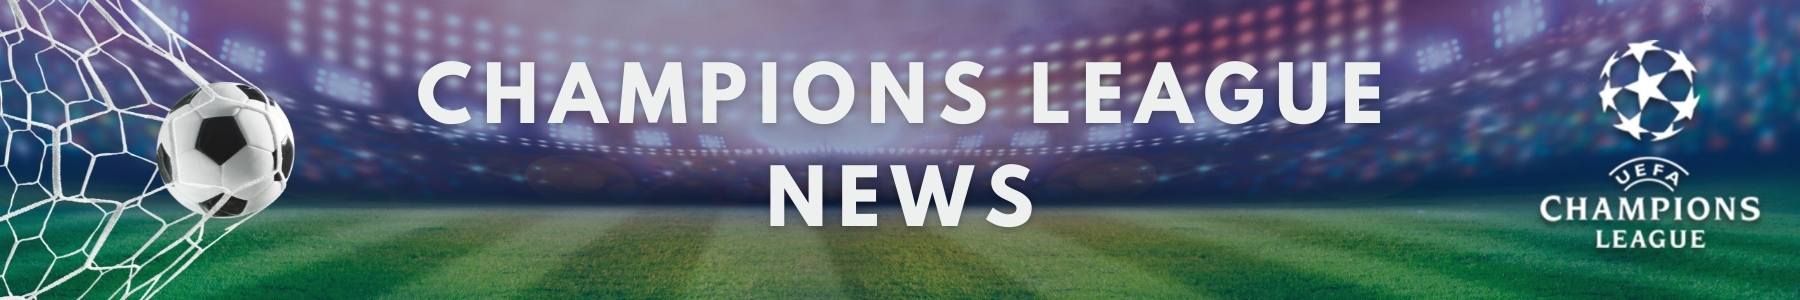 Champions League News - Football